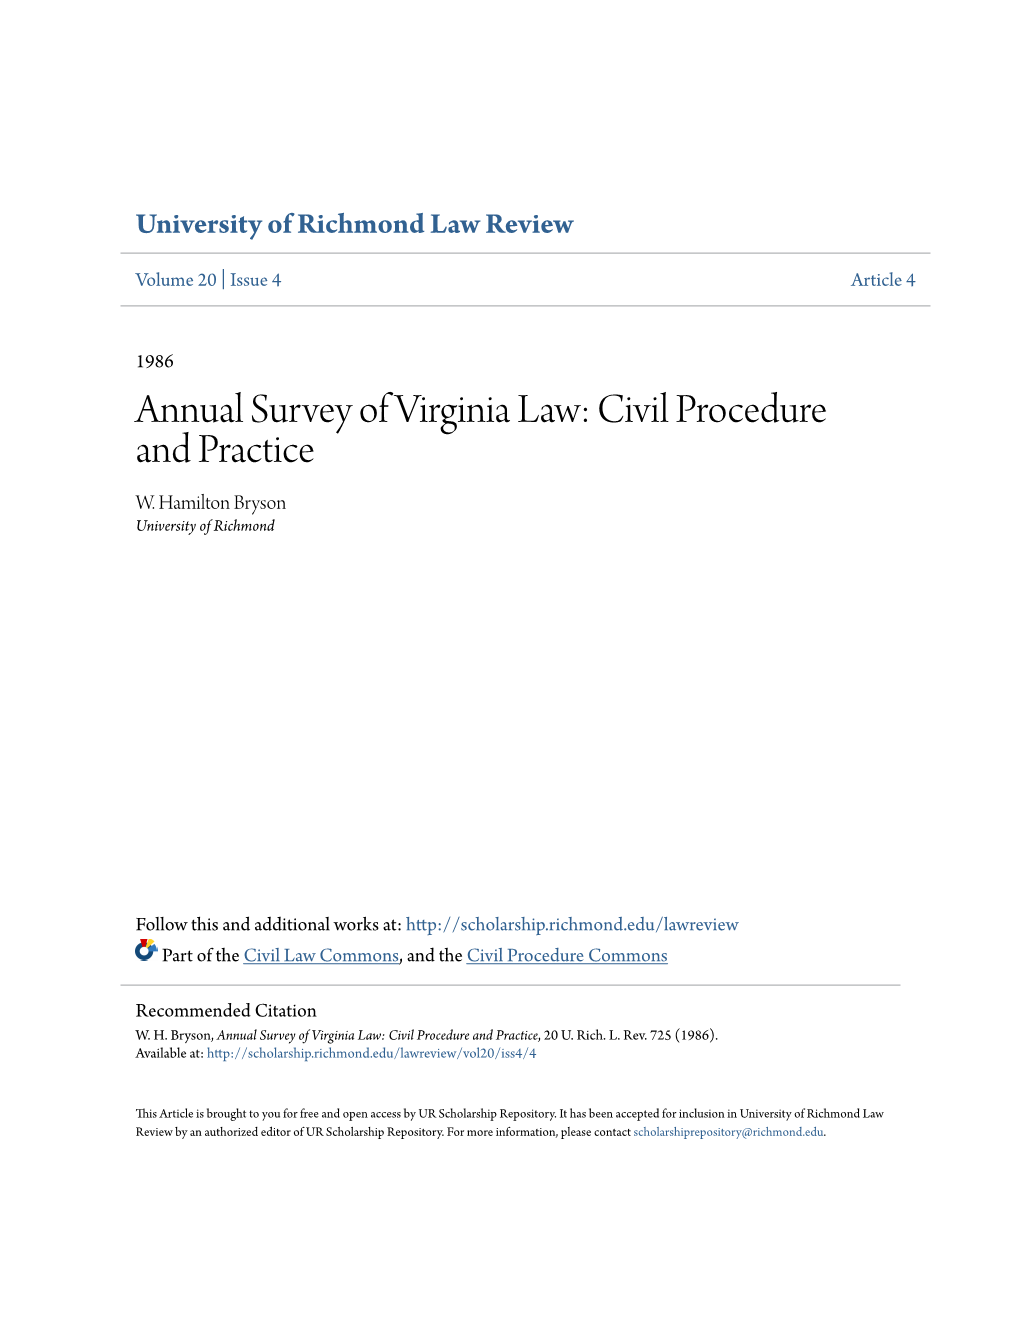 Annual Survey of Virginia Law: Civil Procedure and Practice W